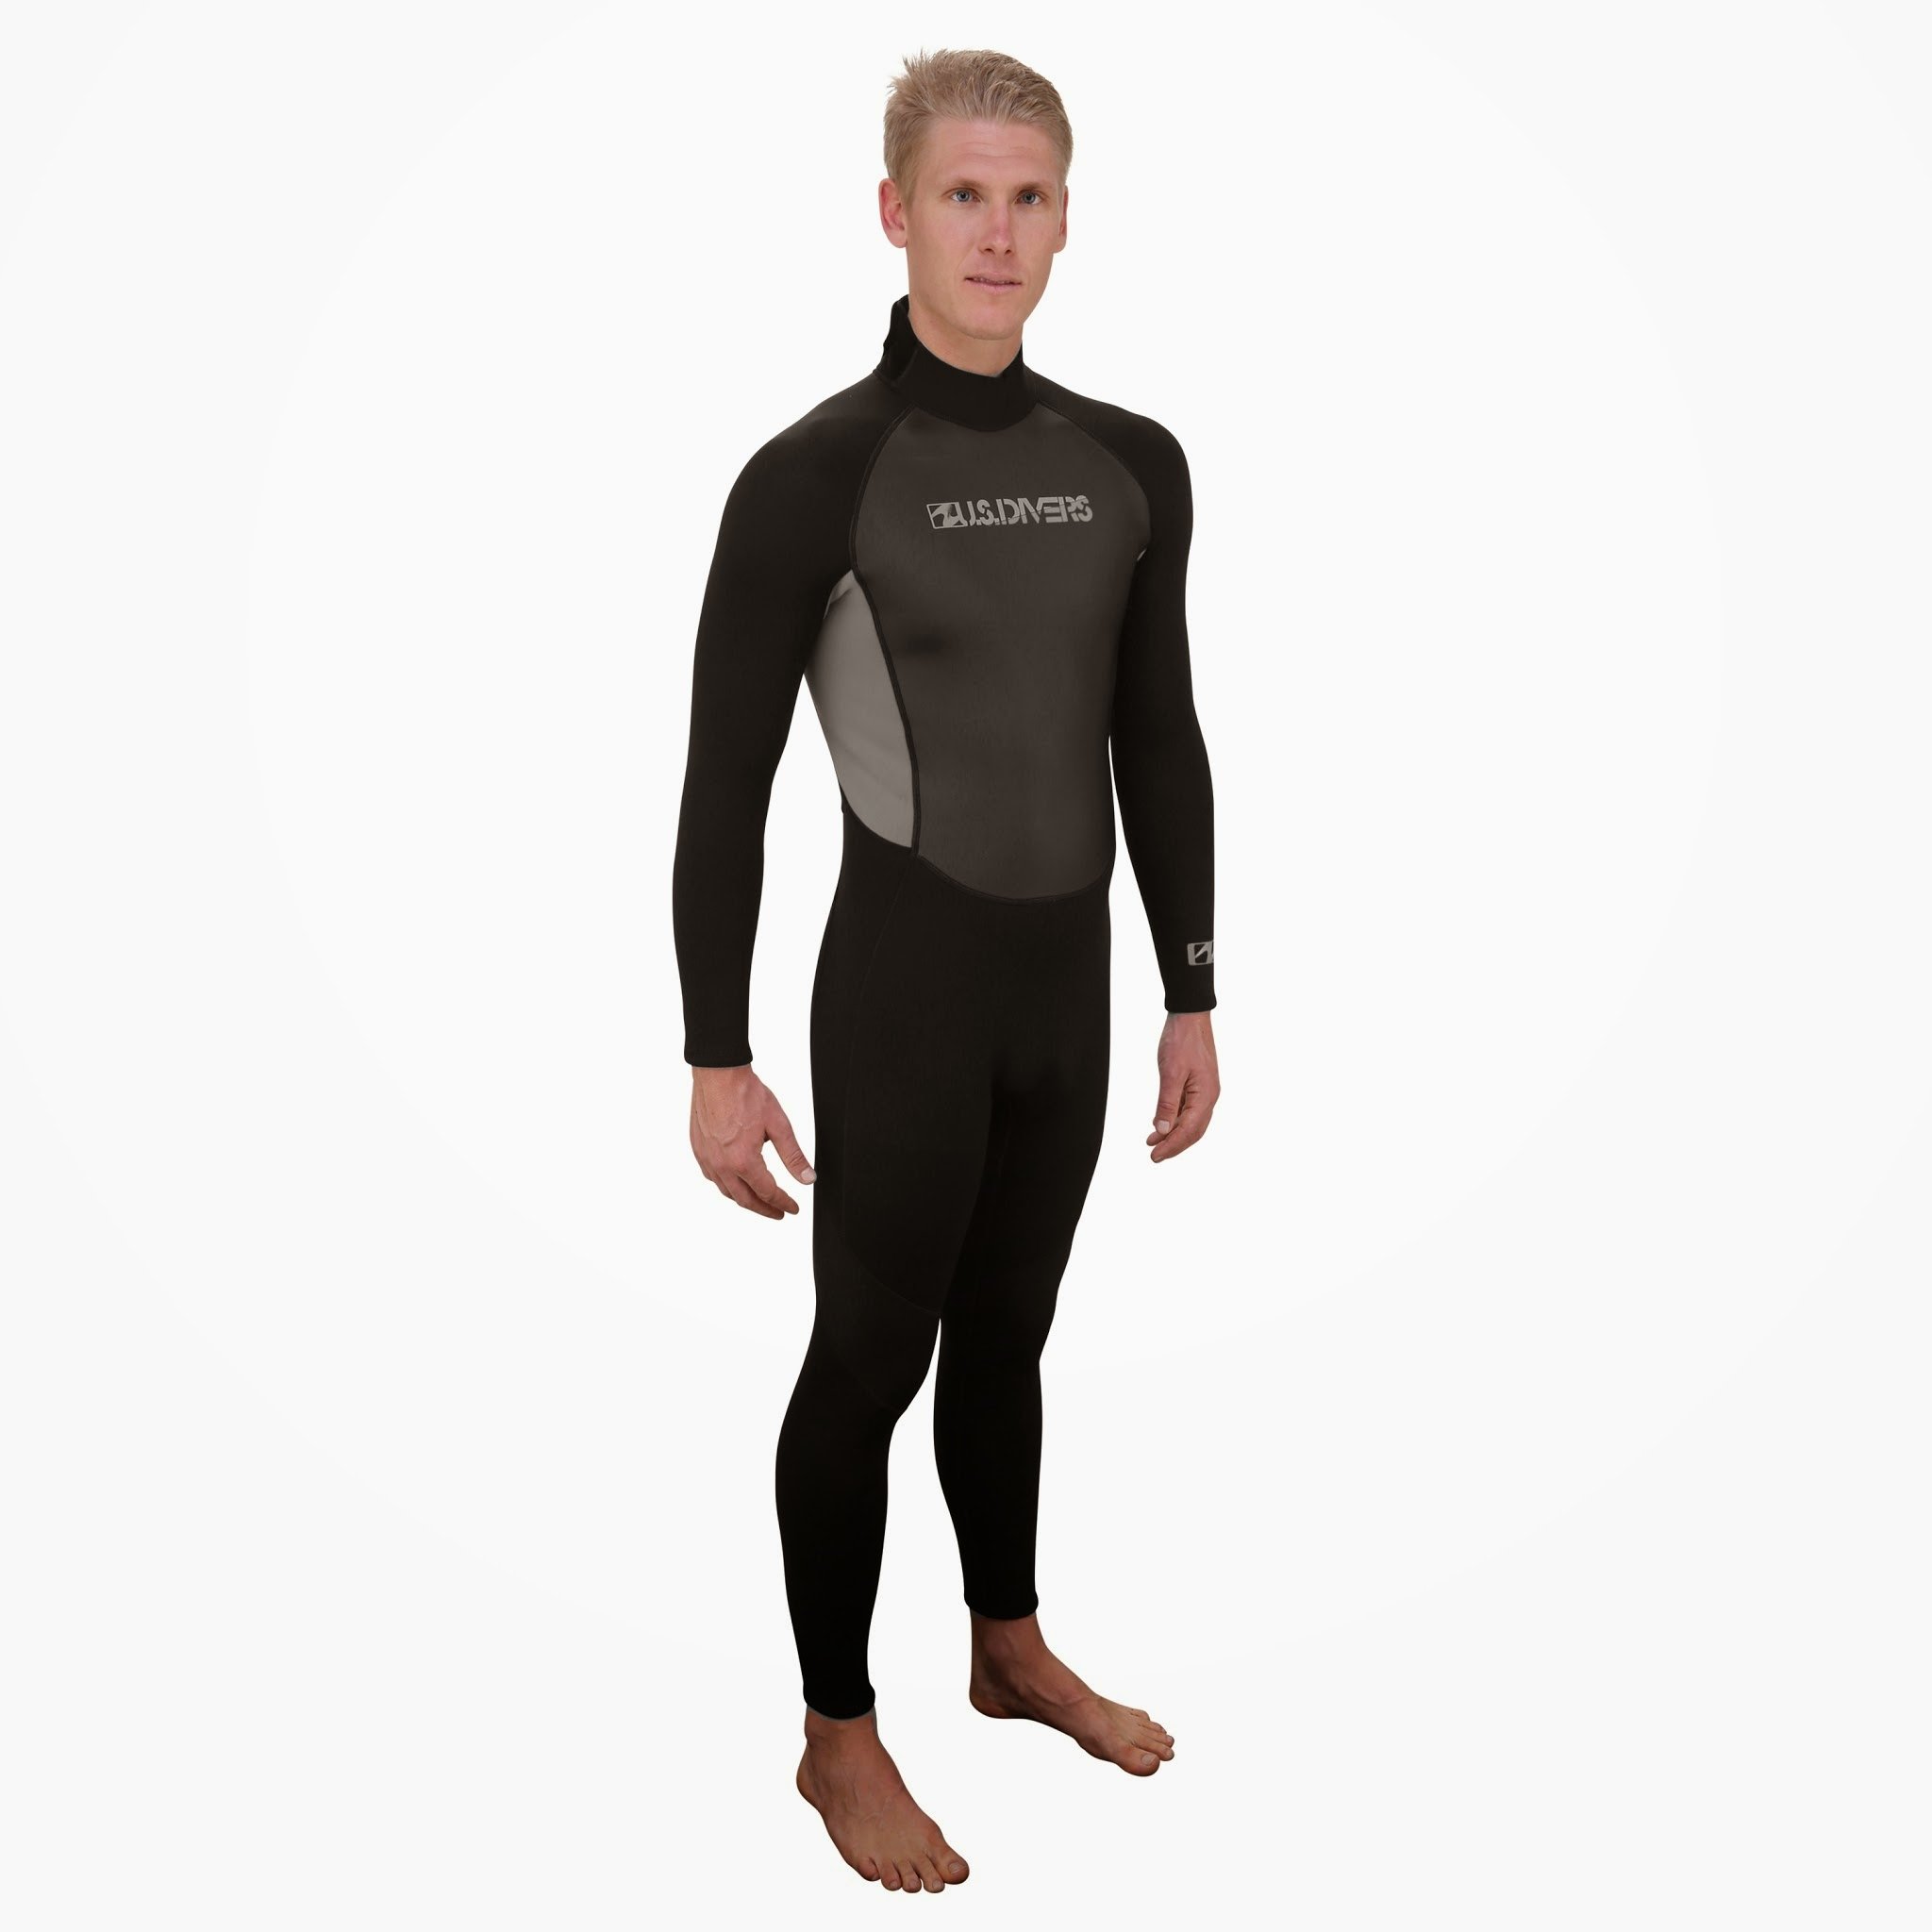 US Divers Mercury Adult Full Wetsuit, Black/Gunmetal, Size Small - image 3 of 5